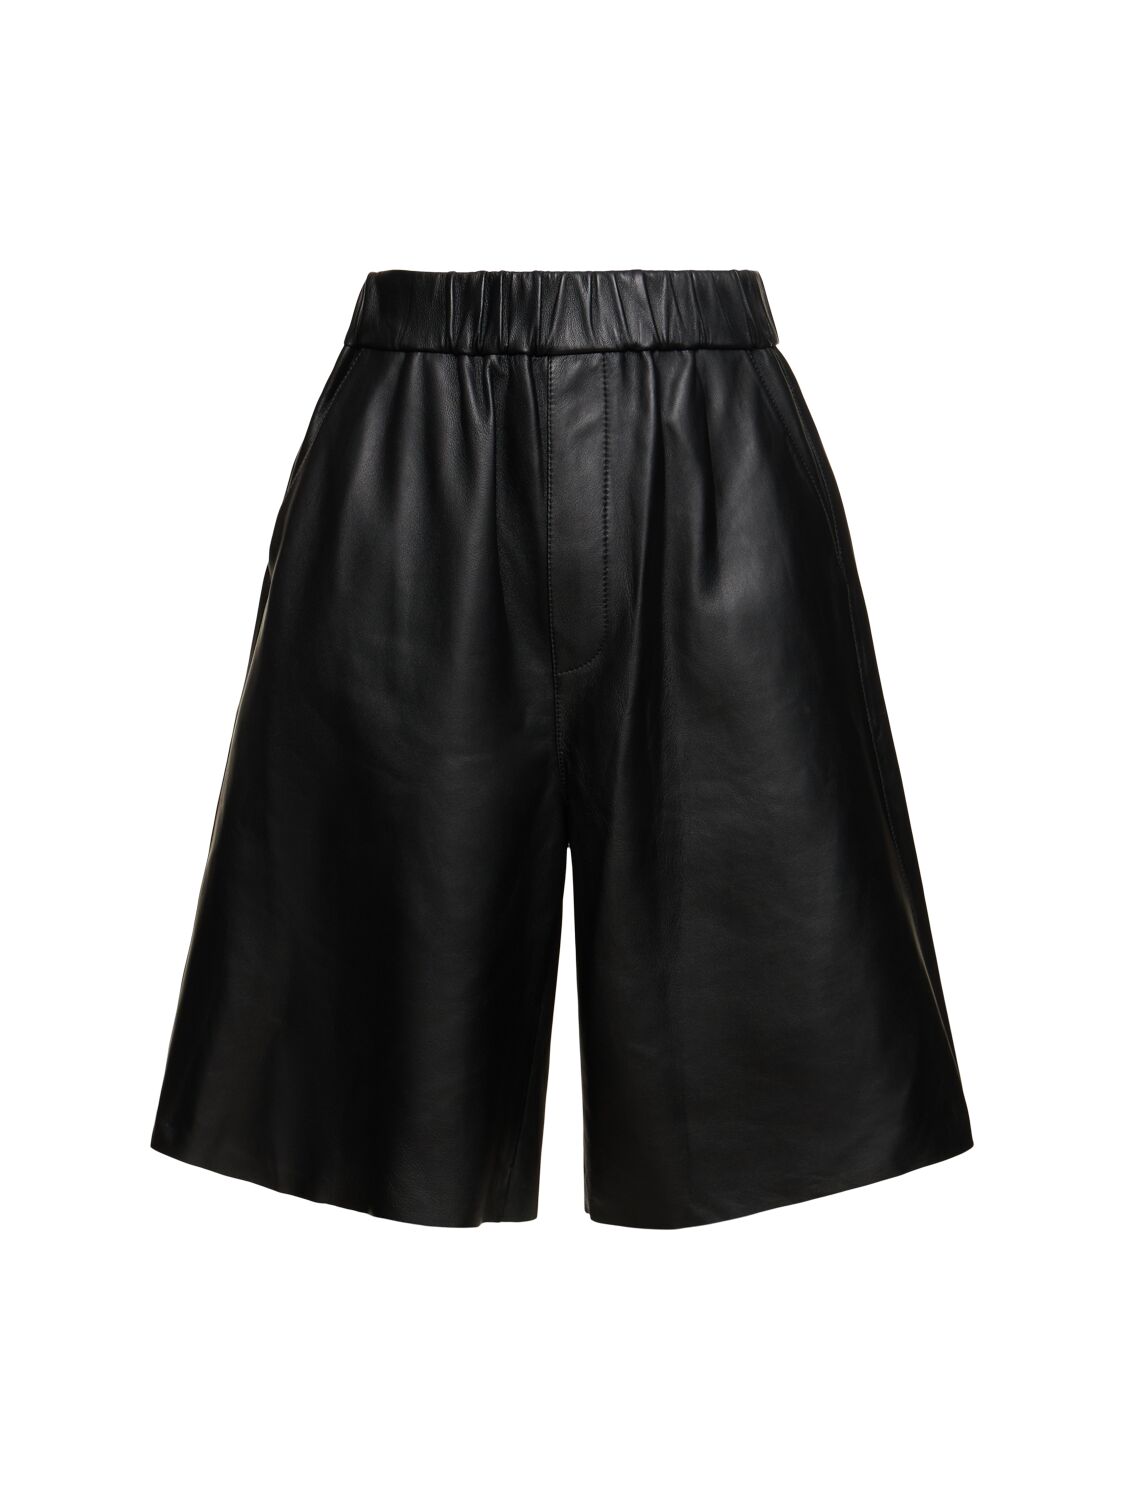 Image of Adc Leather Shorts